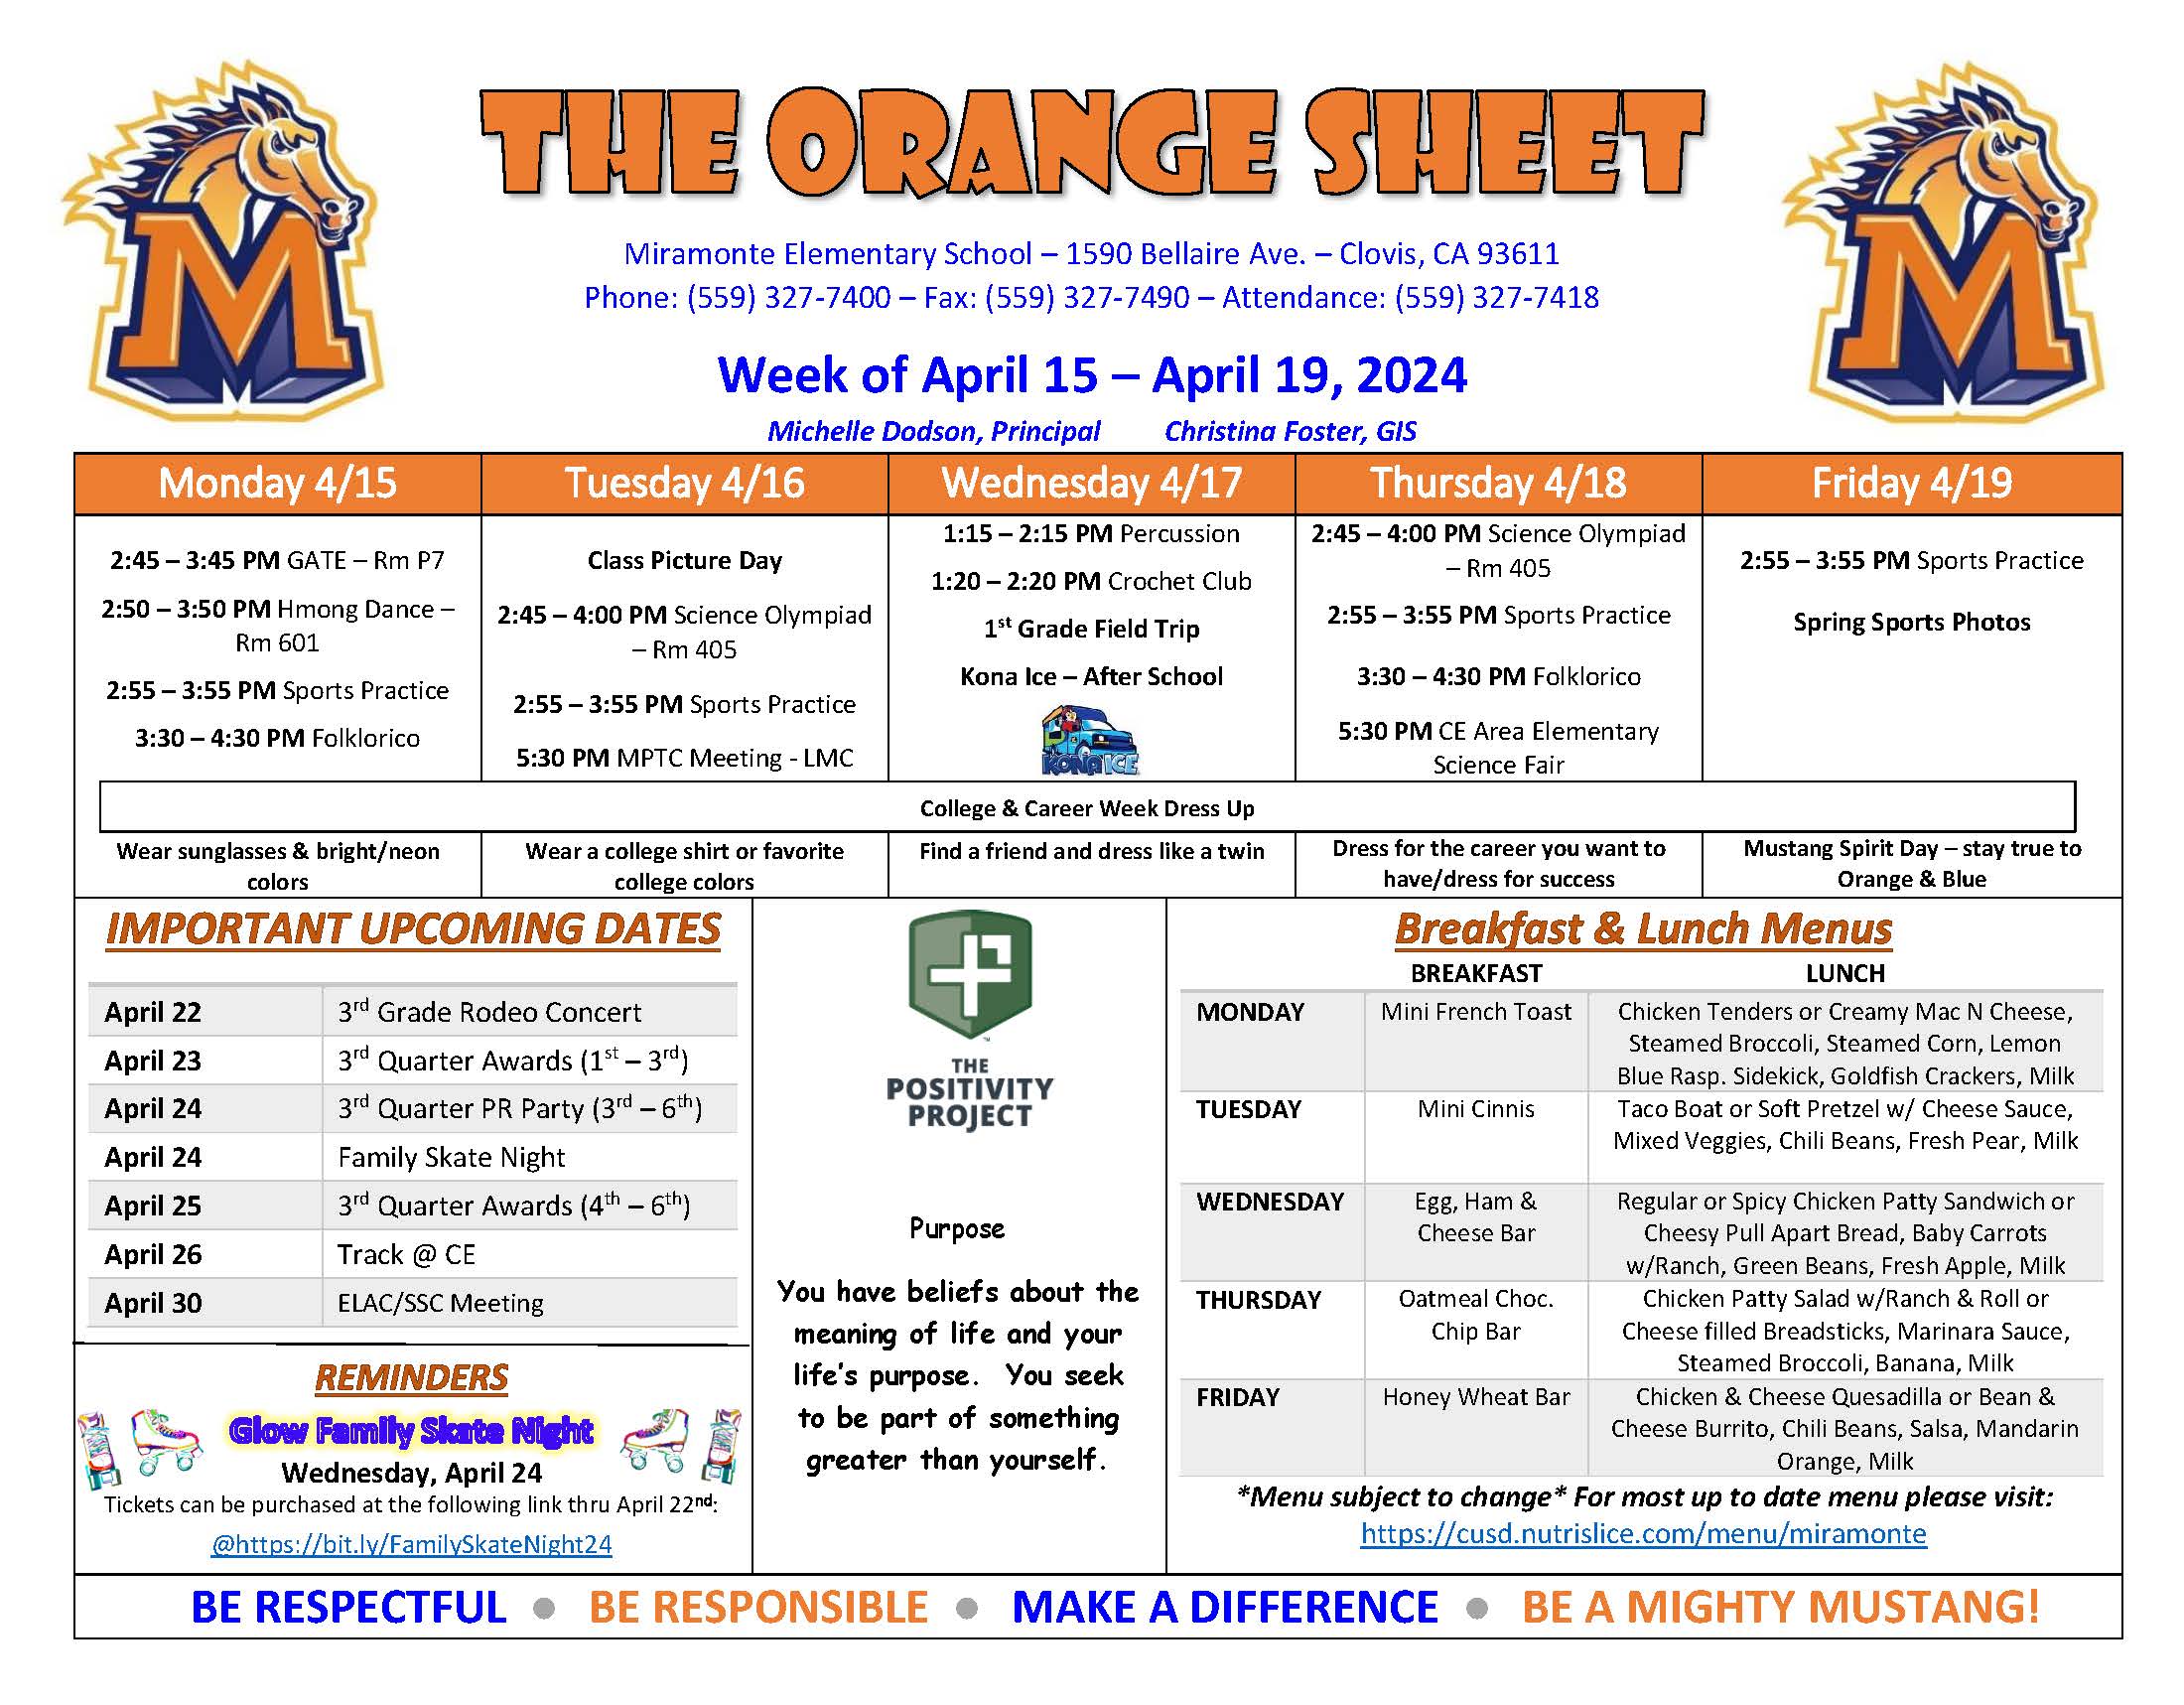 Orange Sheet Schedule click pdf for more information